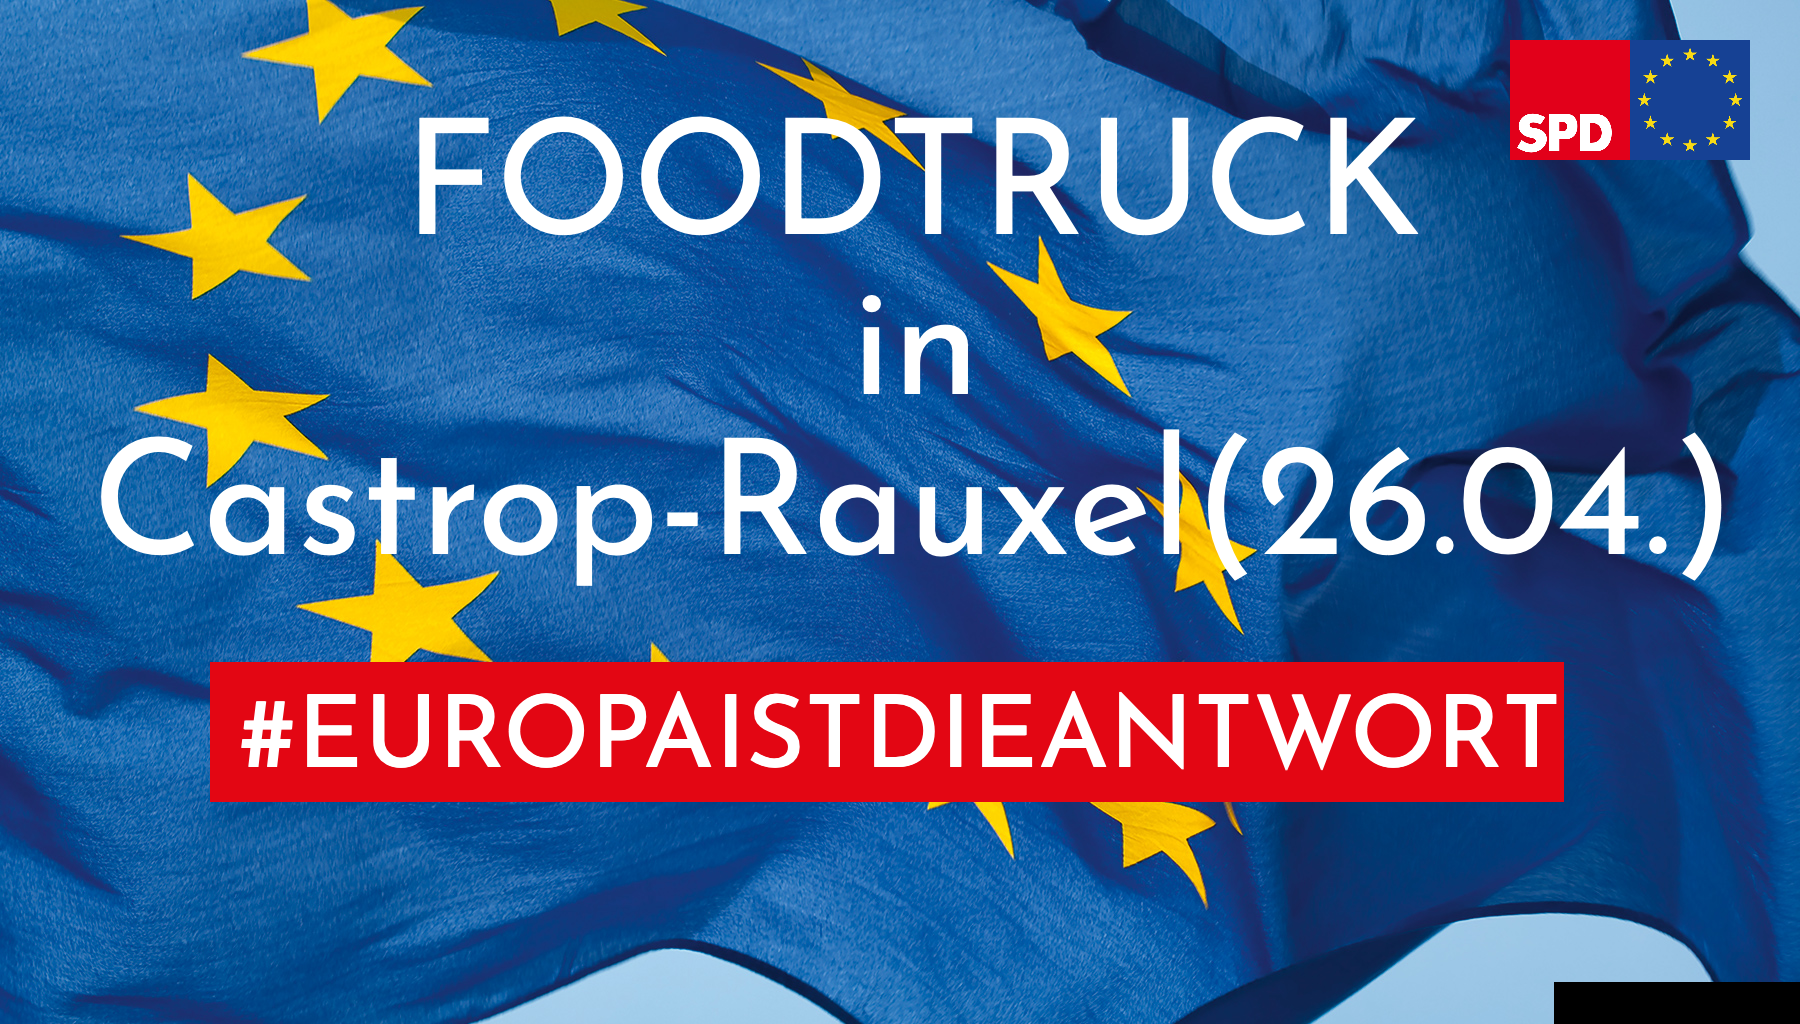 Foodtruck der SPD kommt nach Castrop-Rauxel